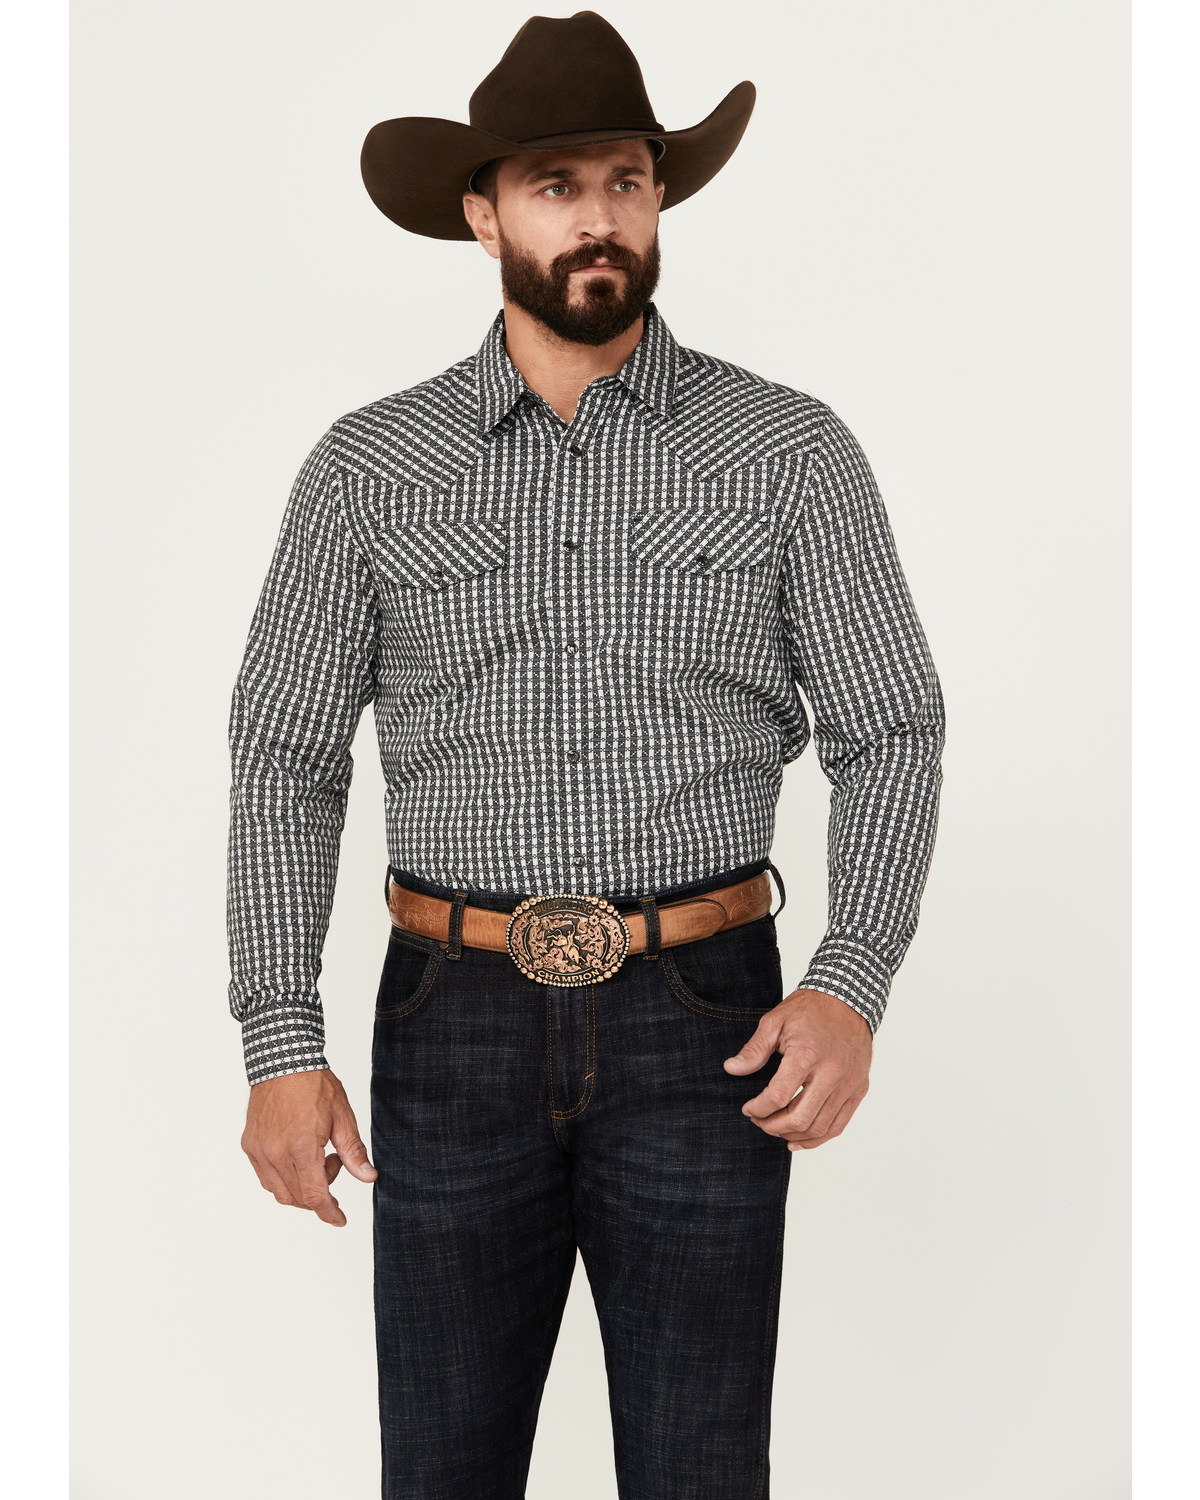 Gibson Trading Co Men's Cube Plaid Print Long Sleeve Snap Western Shirt